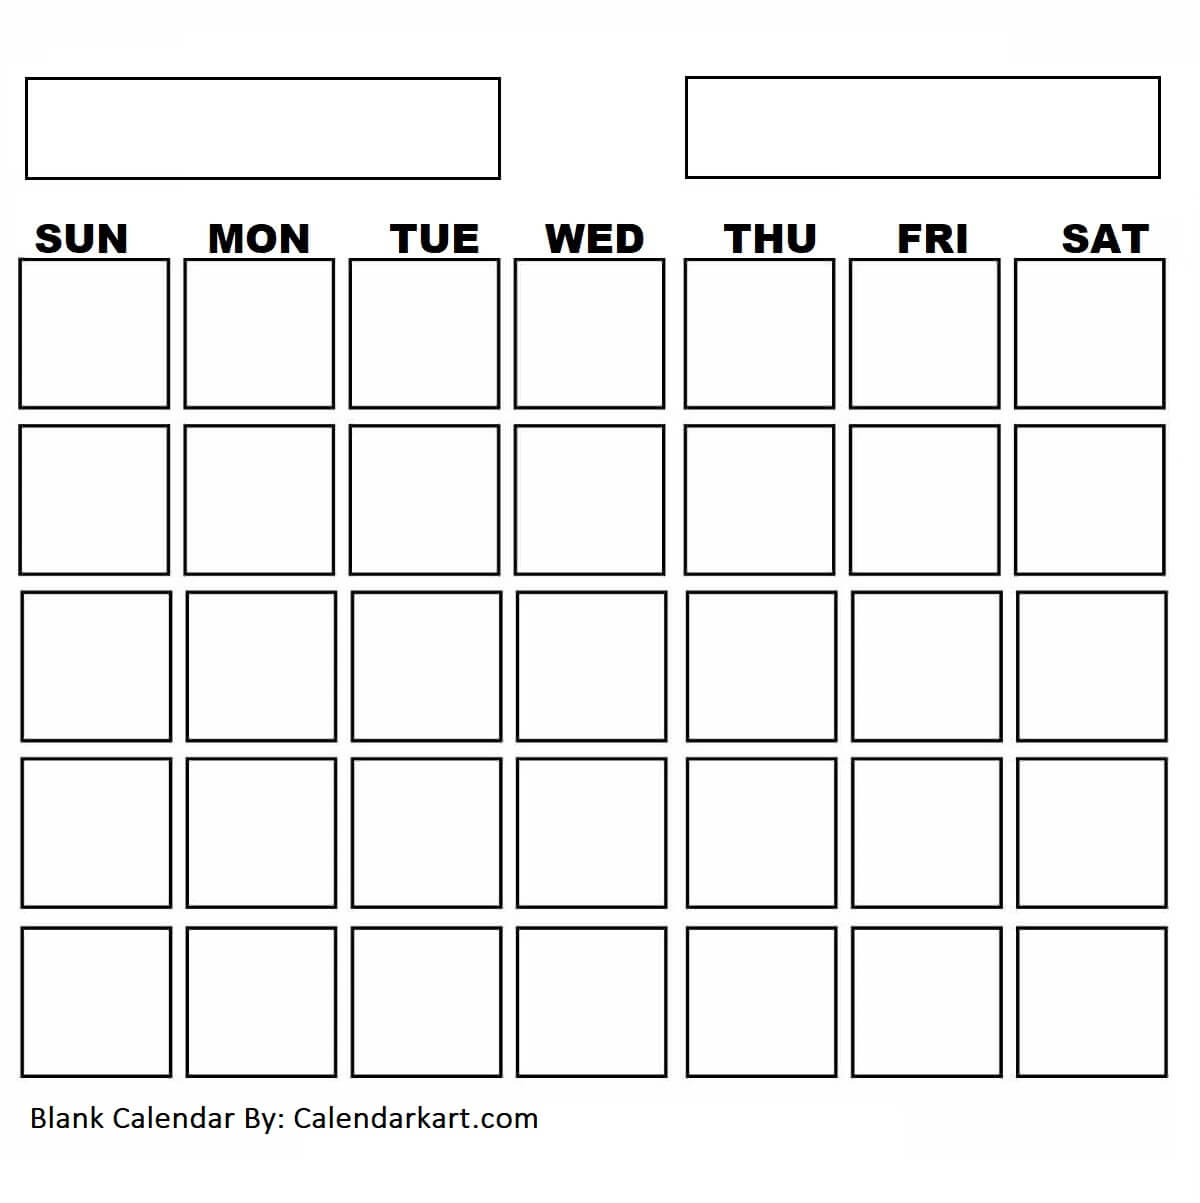 Printable Blank Calendar Template by calendarkart on DeviantArt Pertaining To Full Page Blank Calendar Template